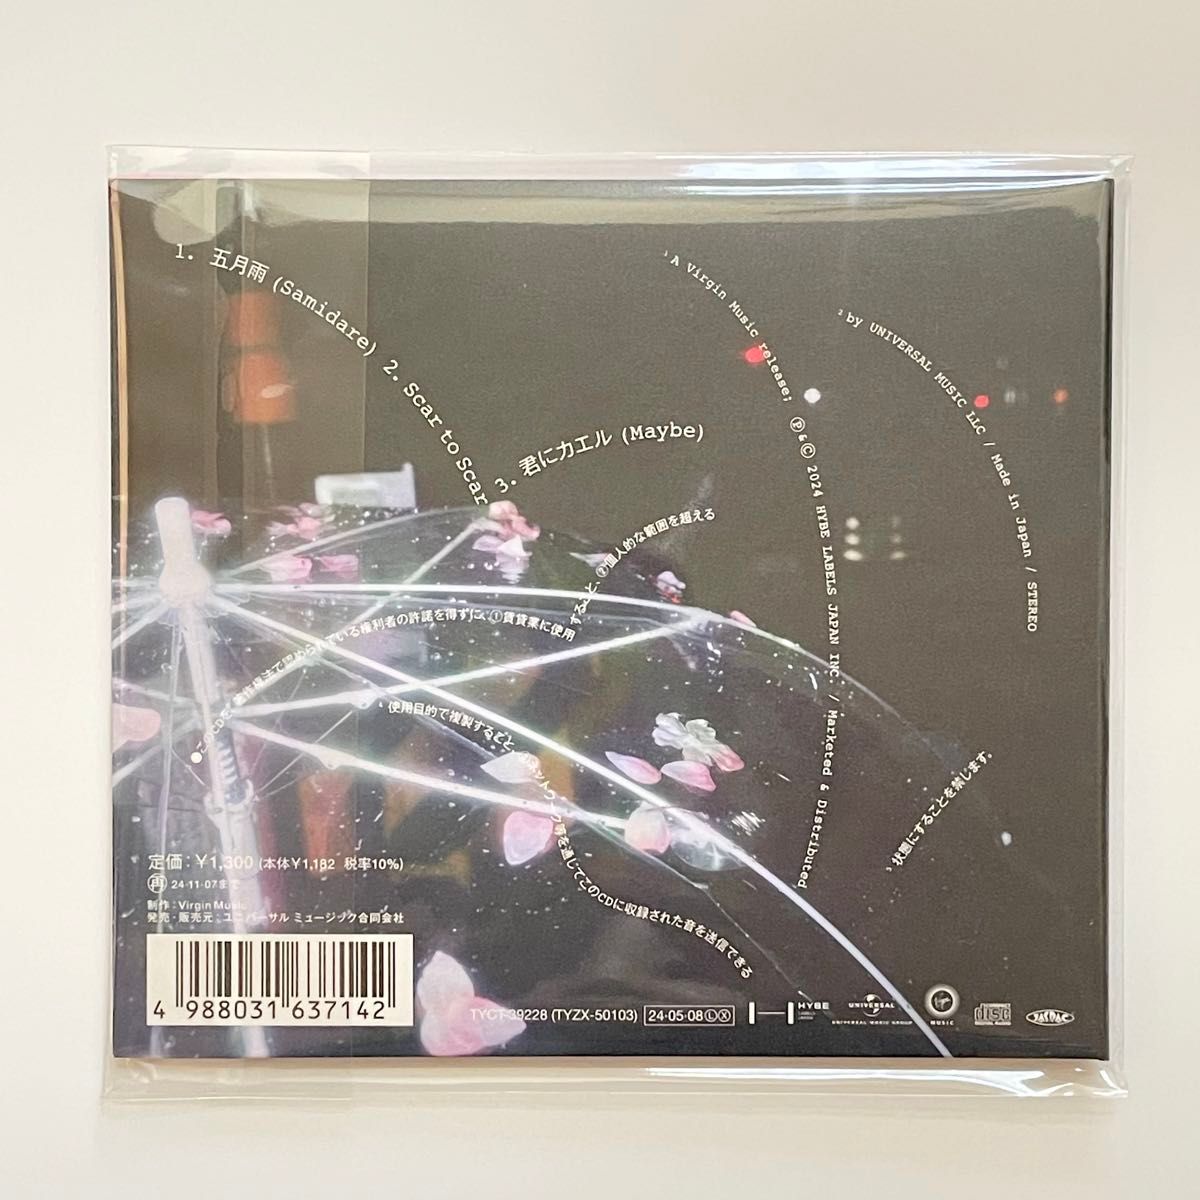 &TEAM K 五月雨 CD 初回限定盤 通常盤 ソロ盤 3形態セット ケイ